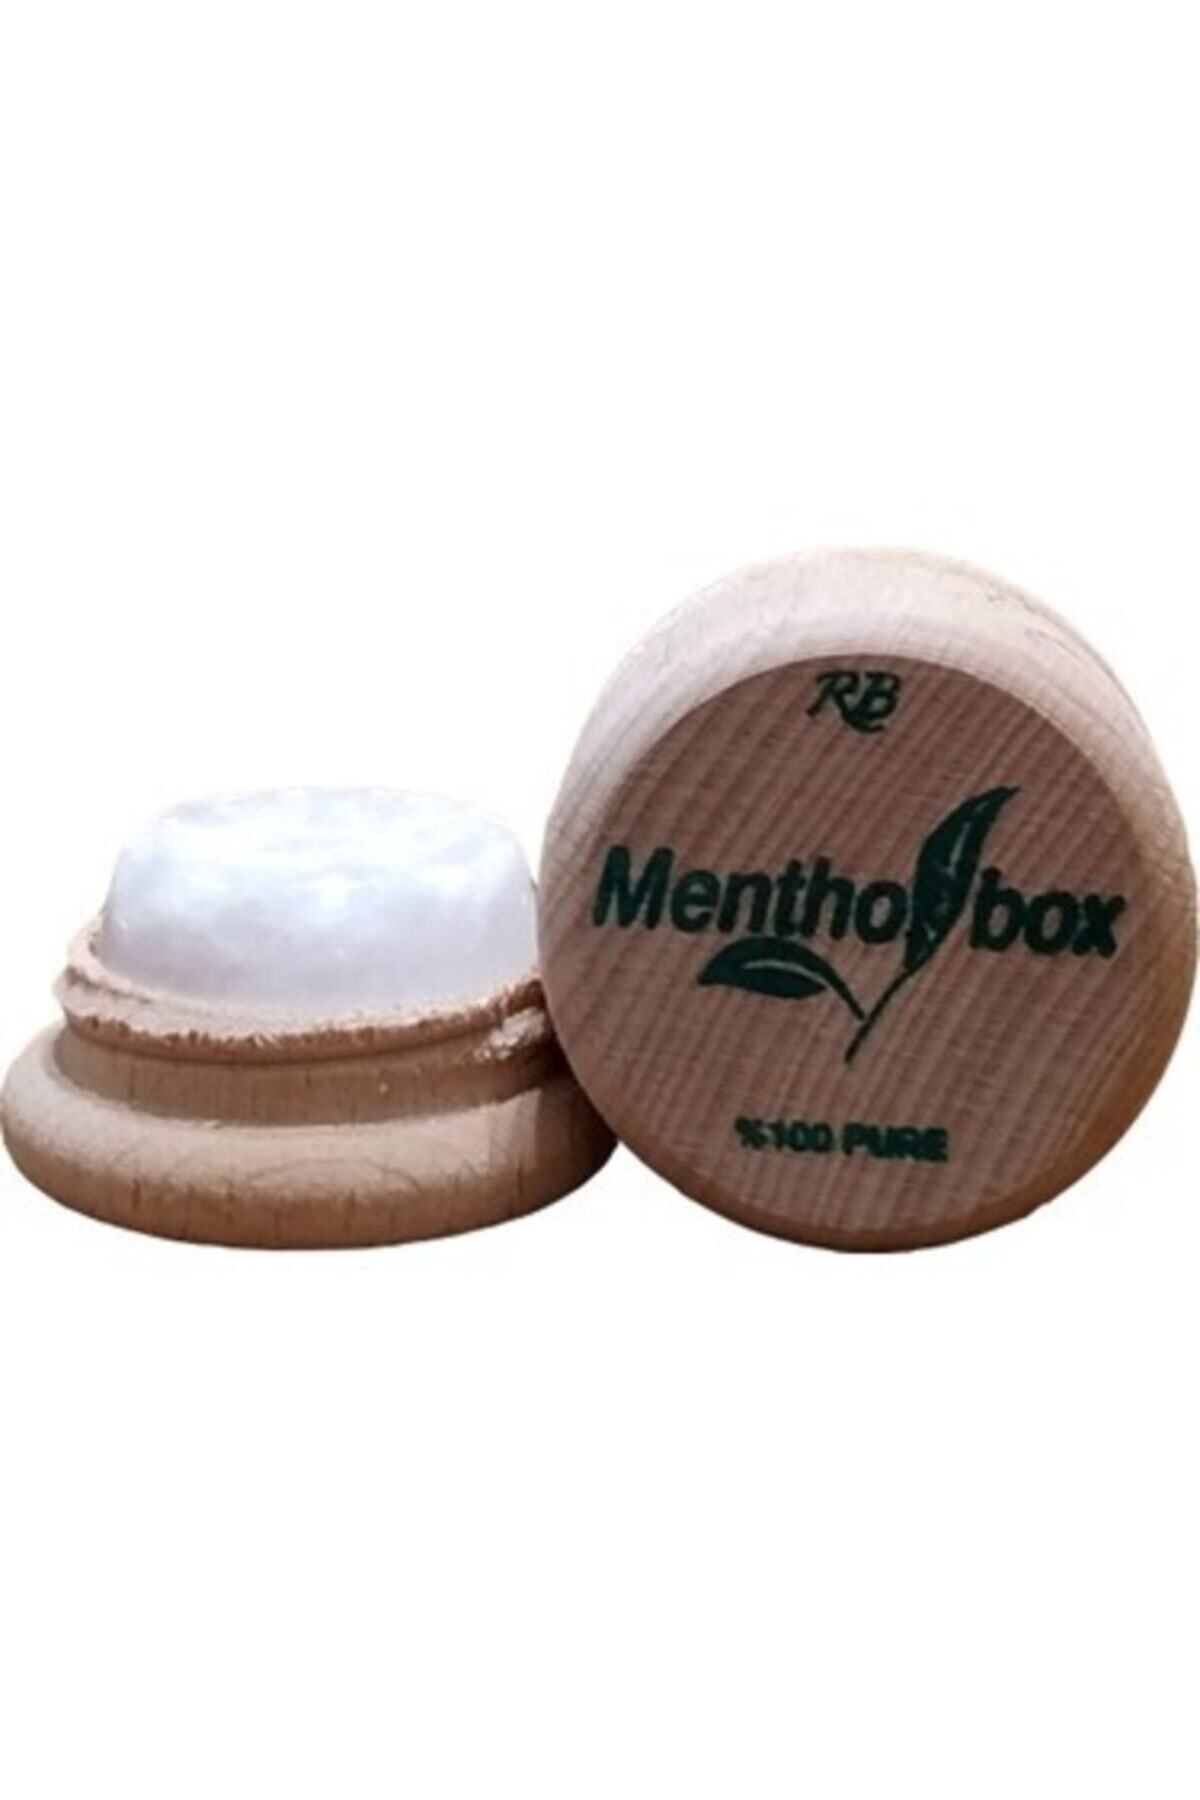 Menthol Box Migren Taşı 6 G